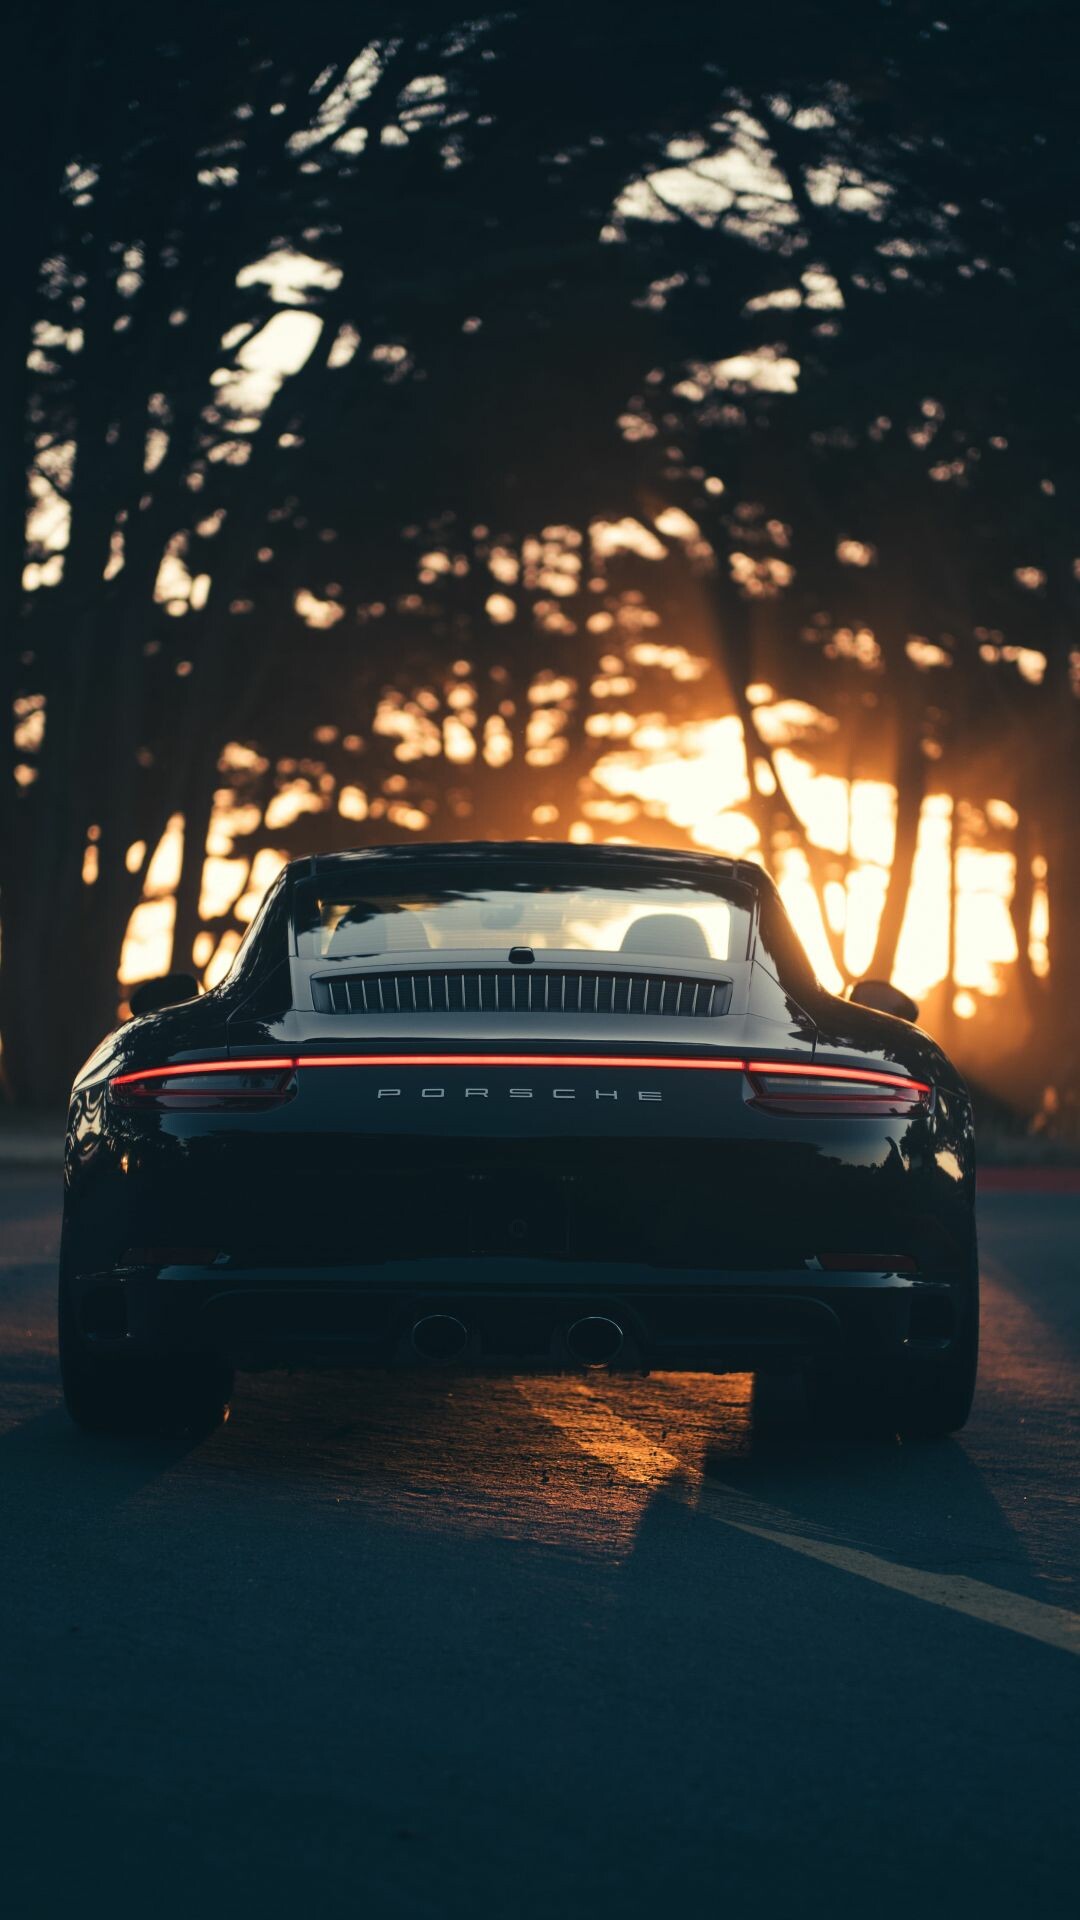 Porsche: The first car brand that sold passengers airbags as standard. 1080x1920 Full HD Wallpaper.